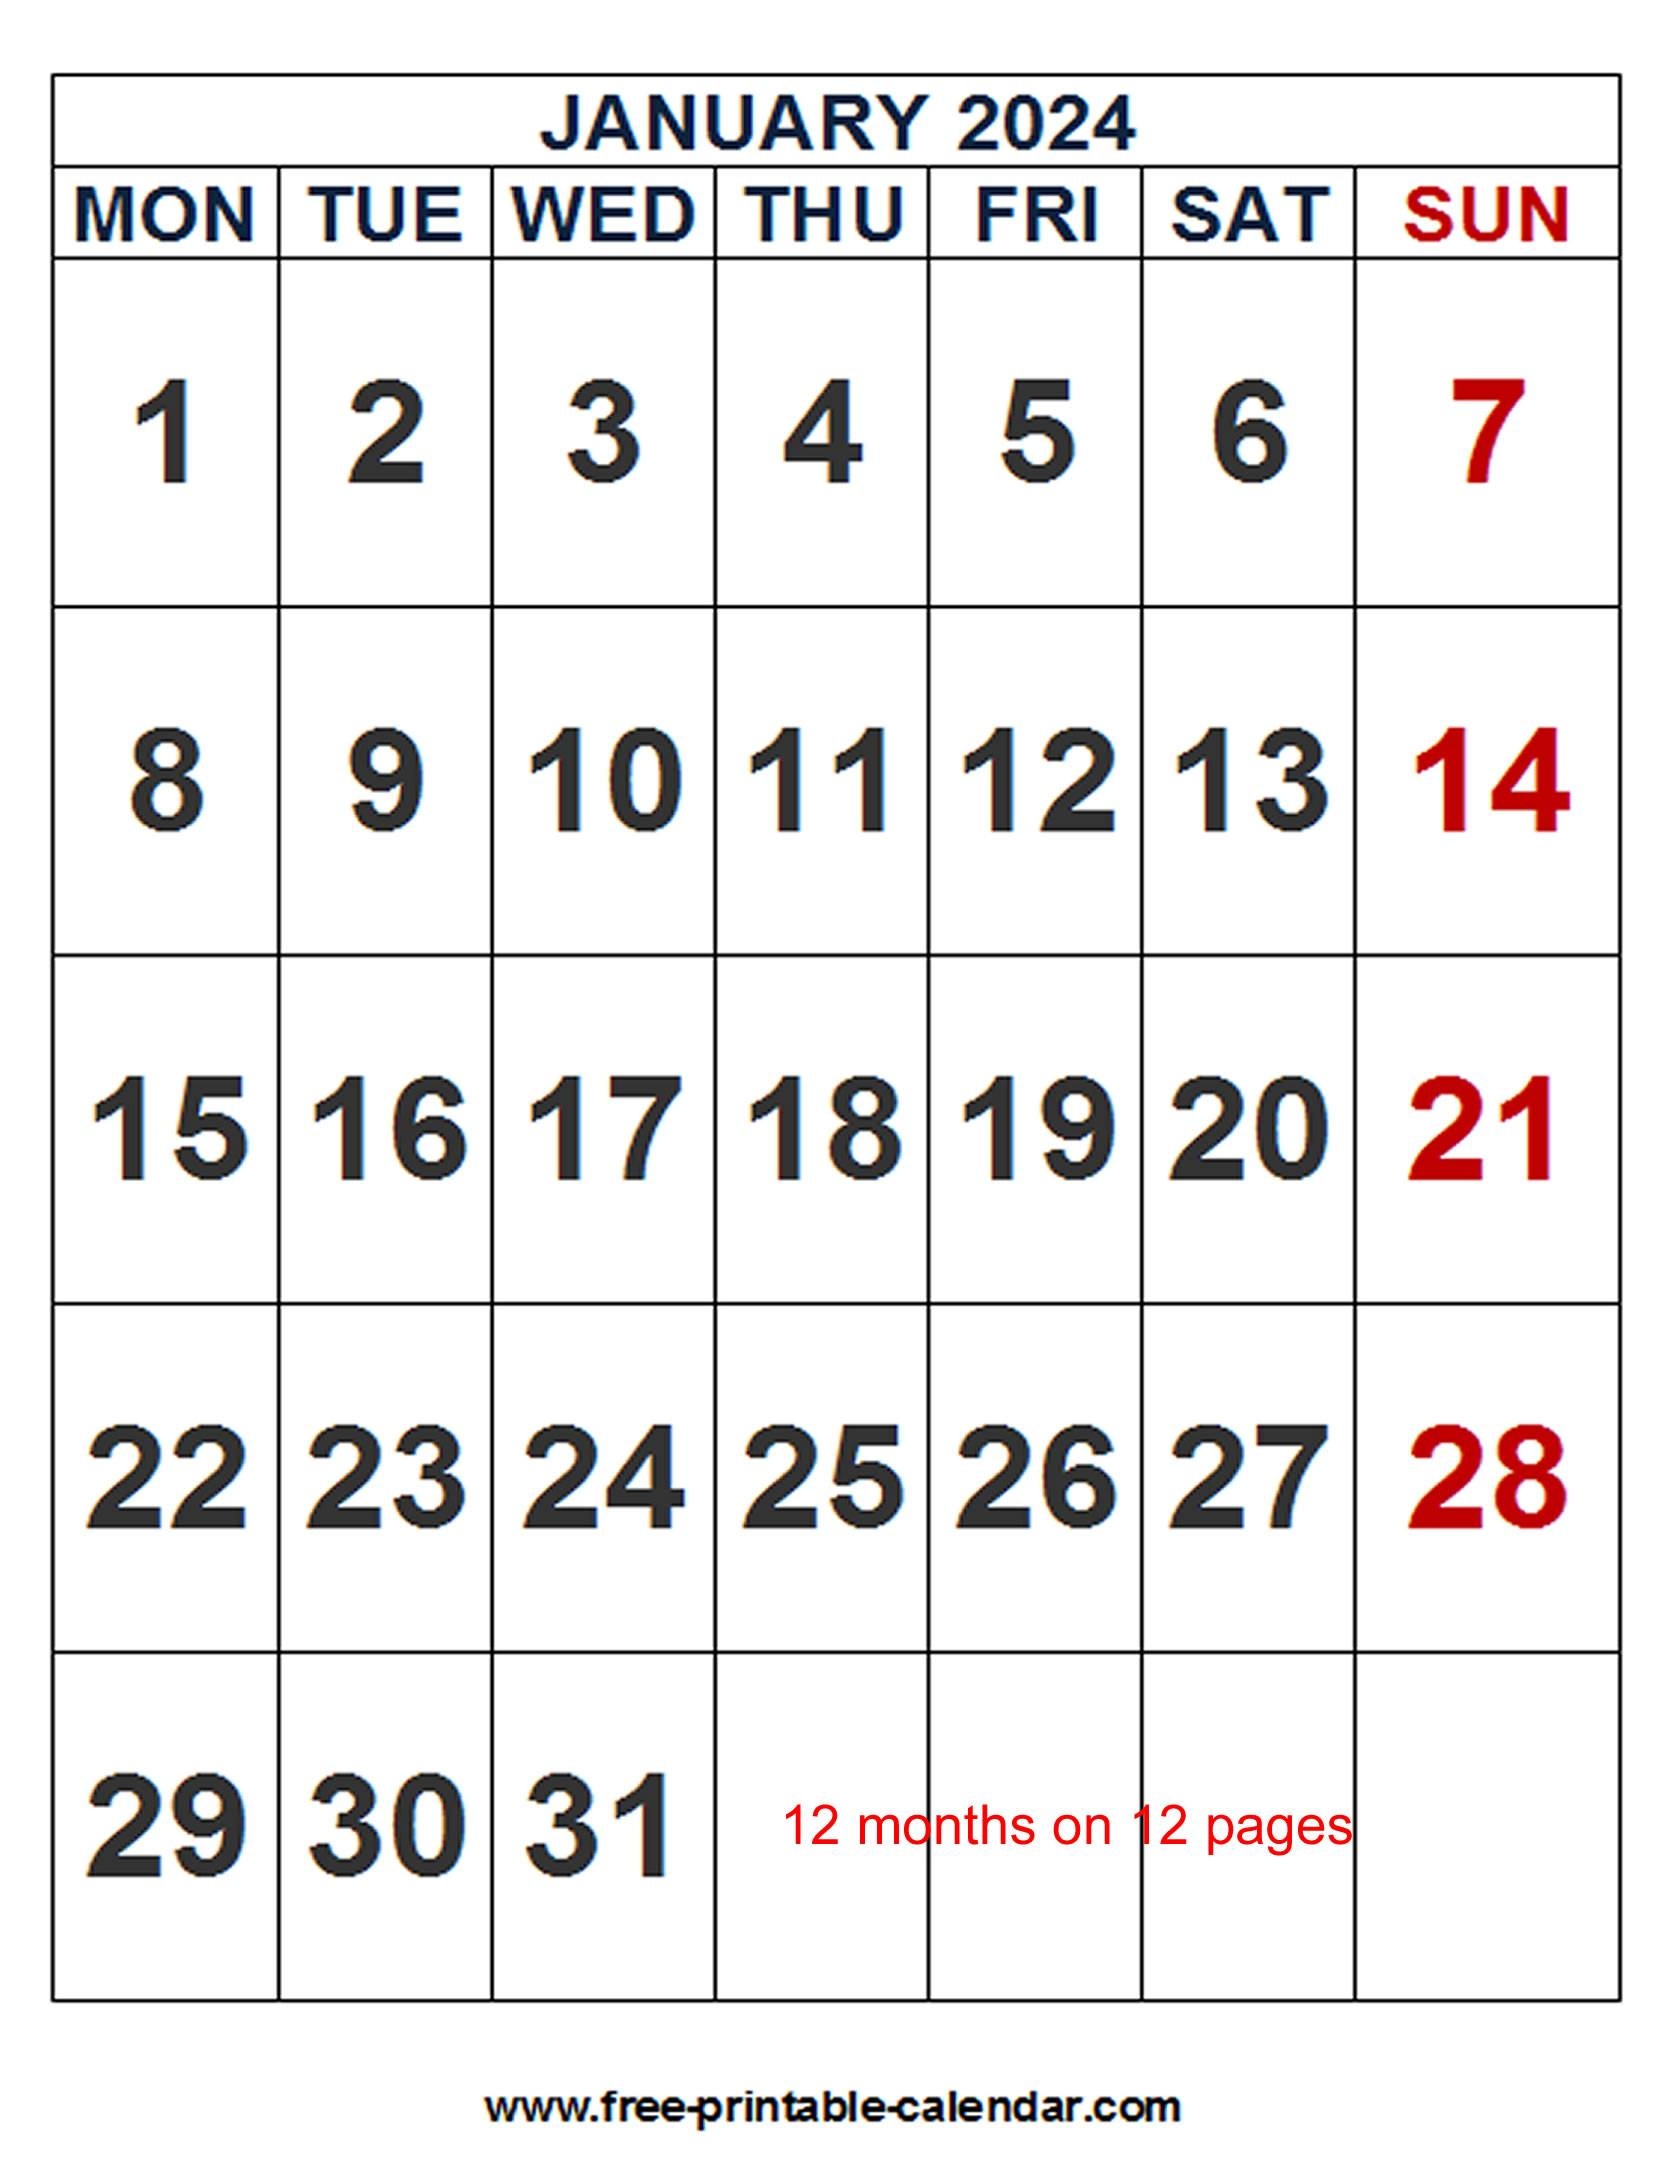 2024 Calendar Word Template - Free-Printable-Calendar throughout Free Printable Calendar 2024 Canada Monthly